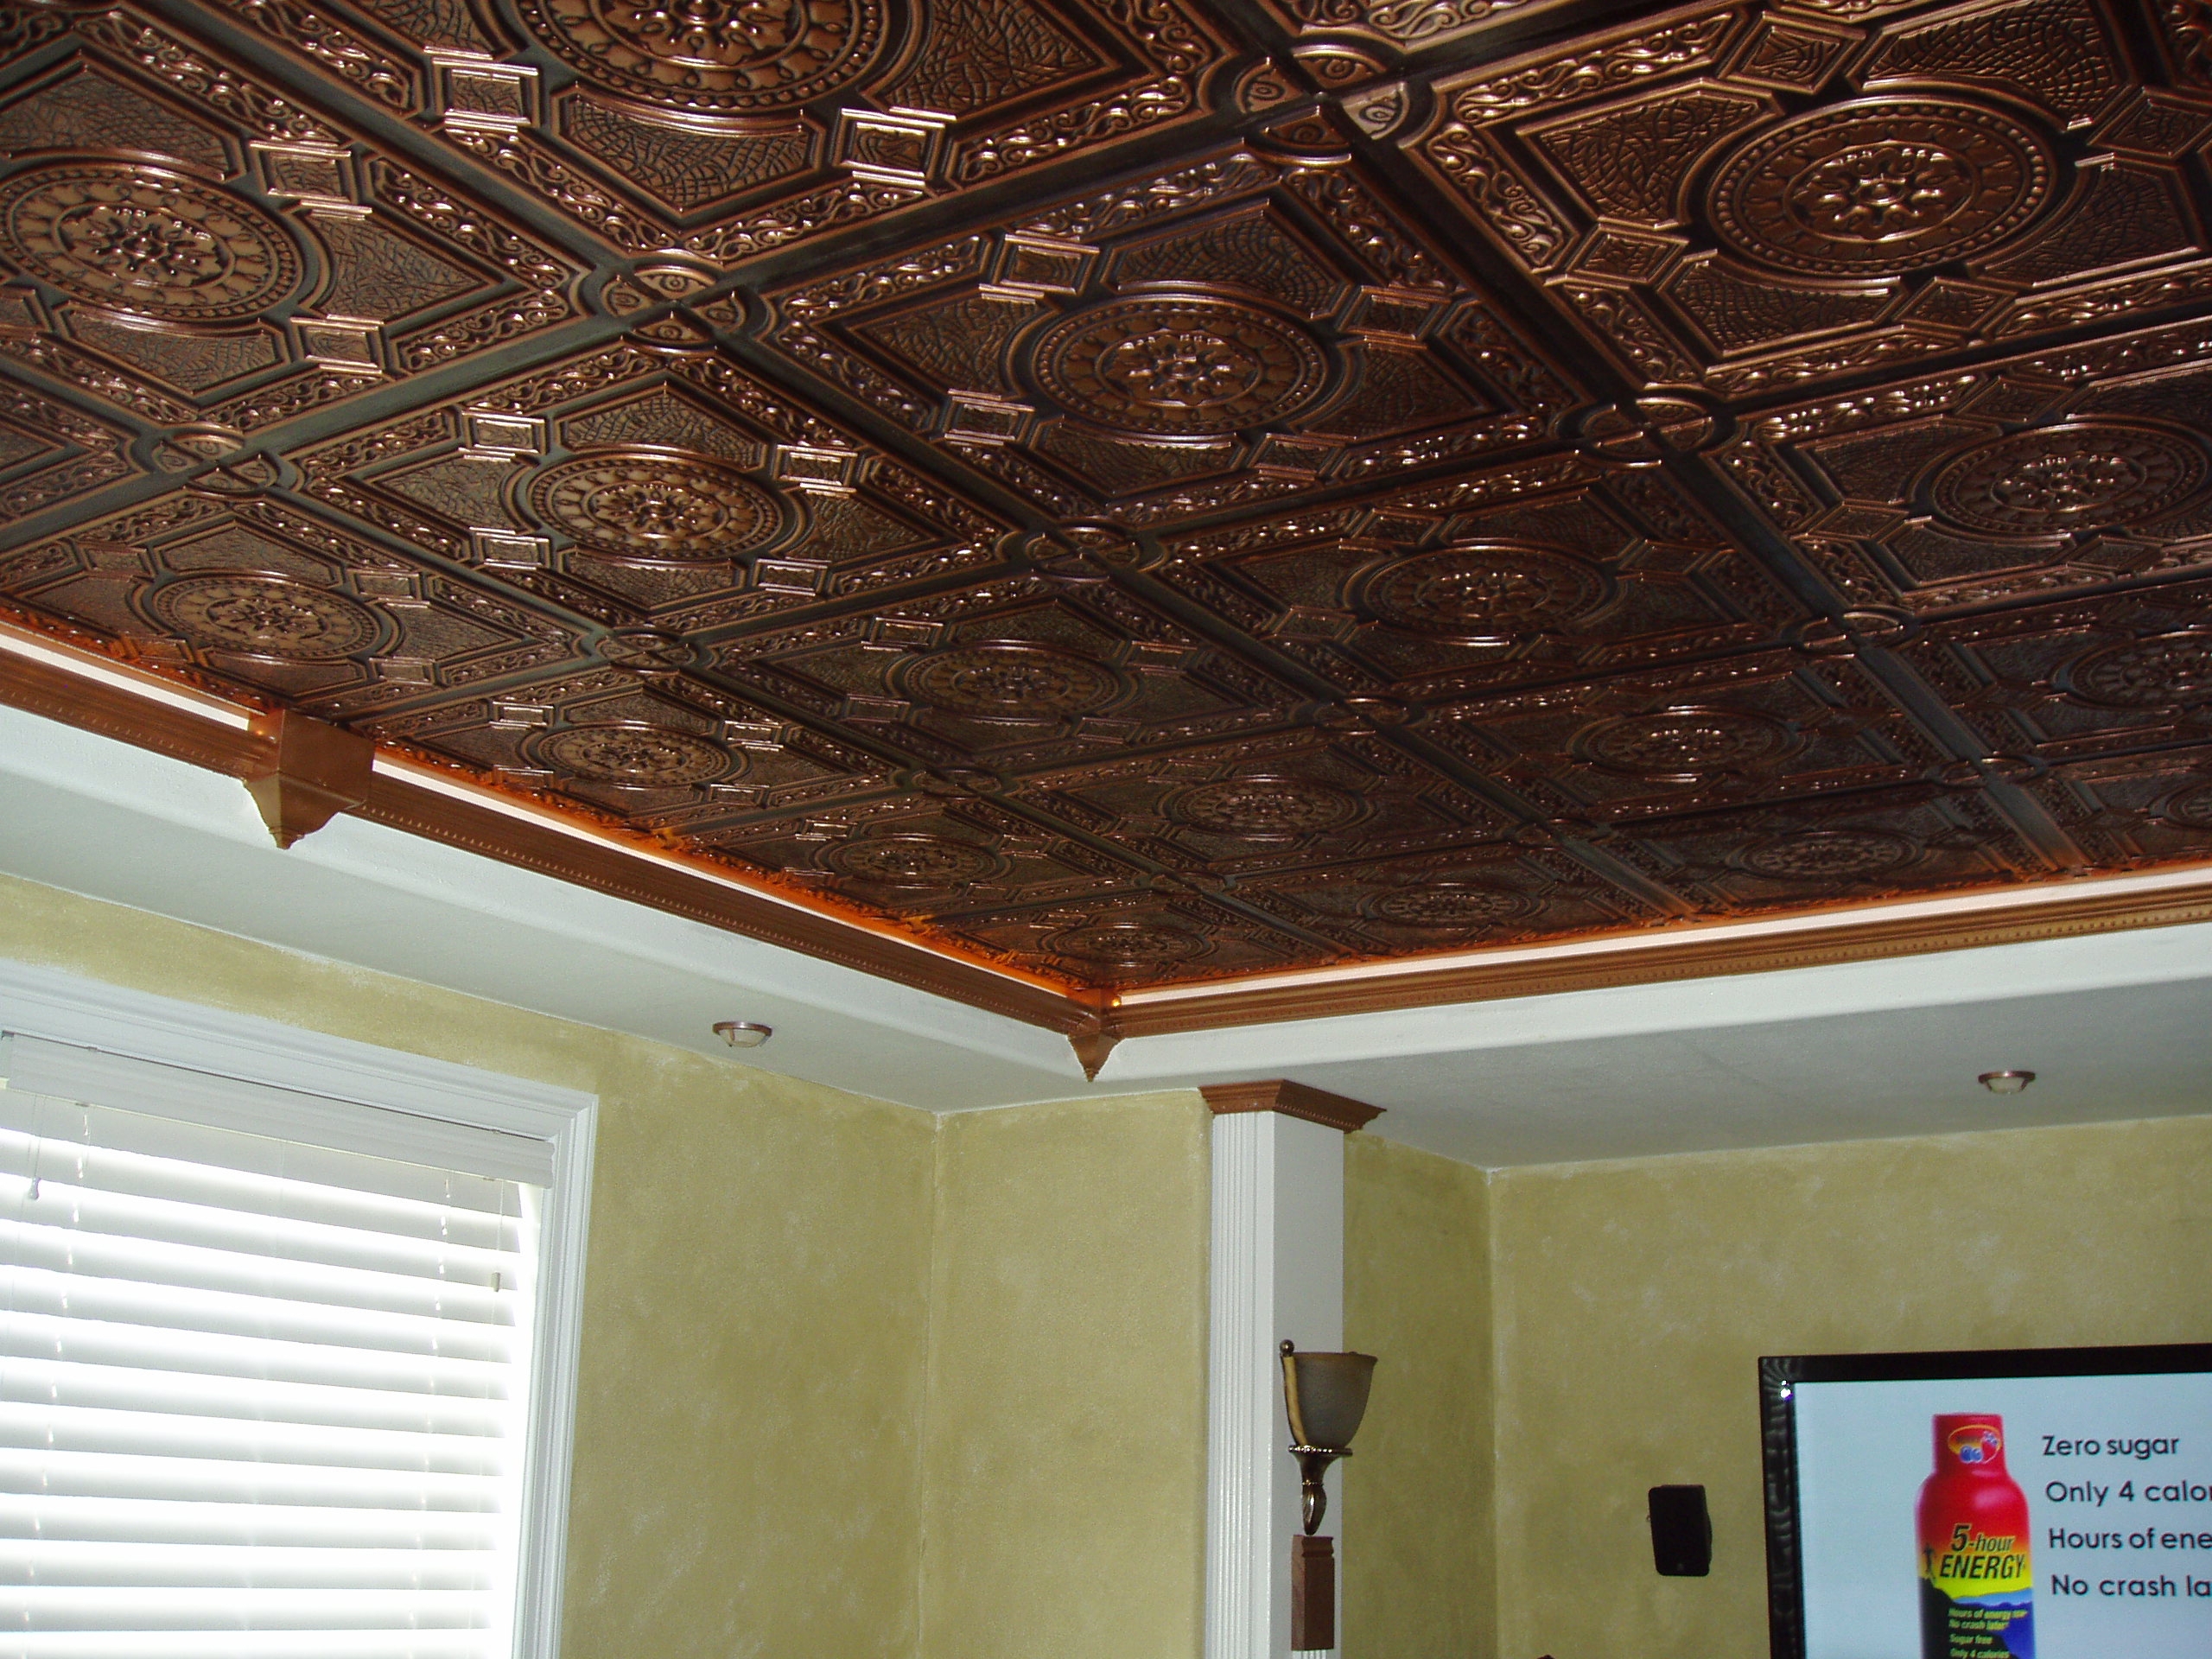 24 X 24 Foam Ceiling Tiles24x24 suspended ceiling tiles ceiling tiles